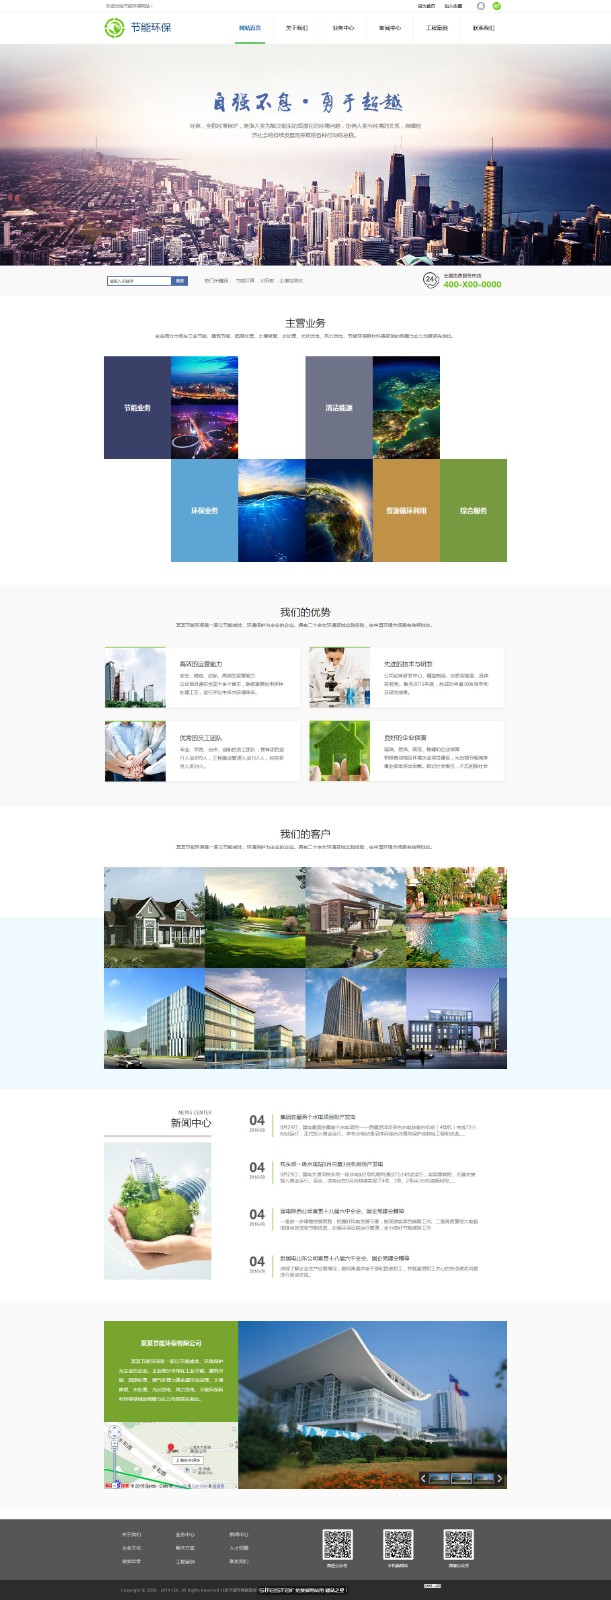 环保网站模板-environment-441